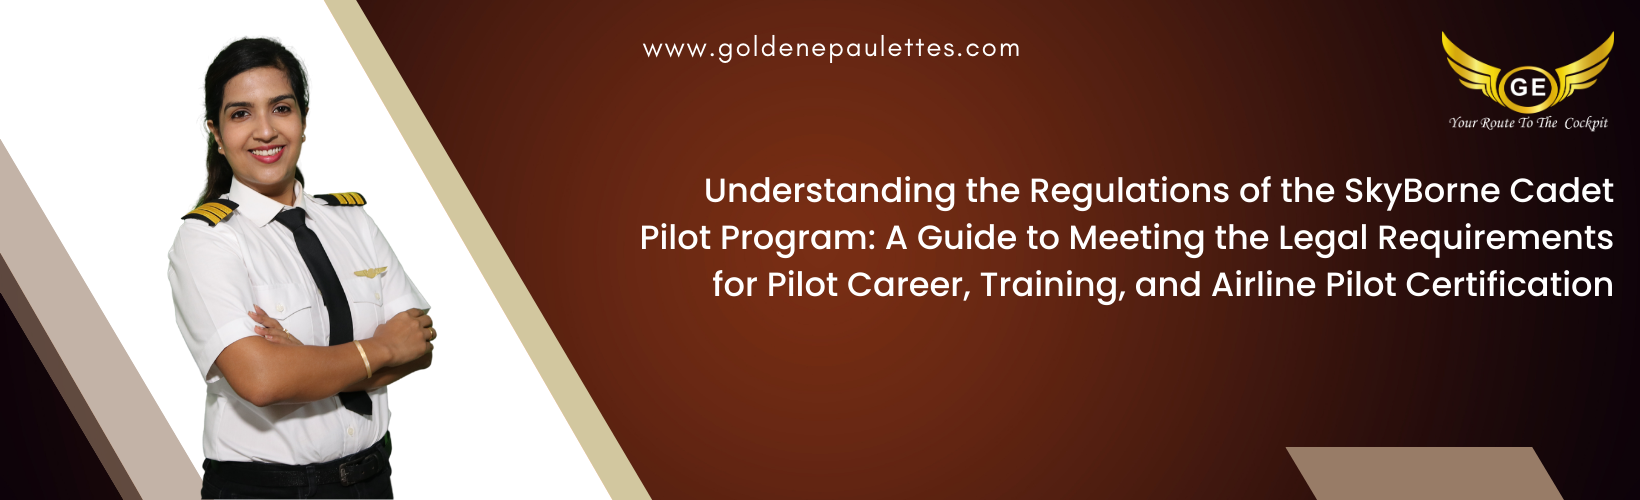 Understanding the Regulations of the SkyBorne Cadet Pilot Program